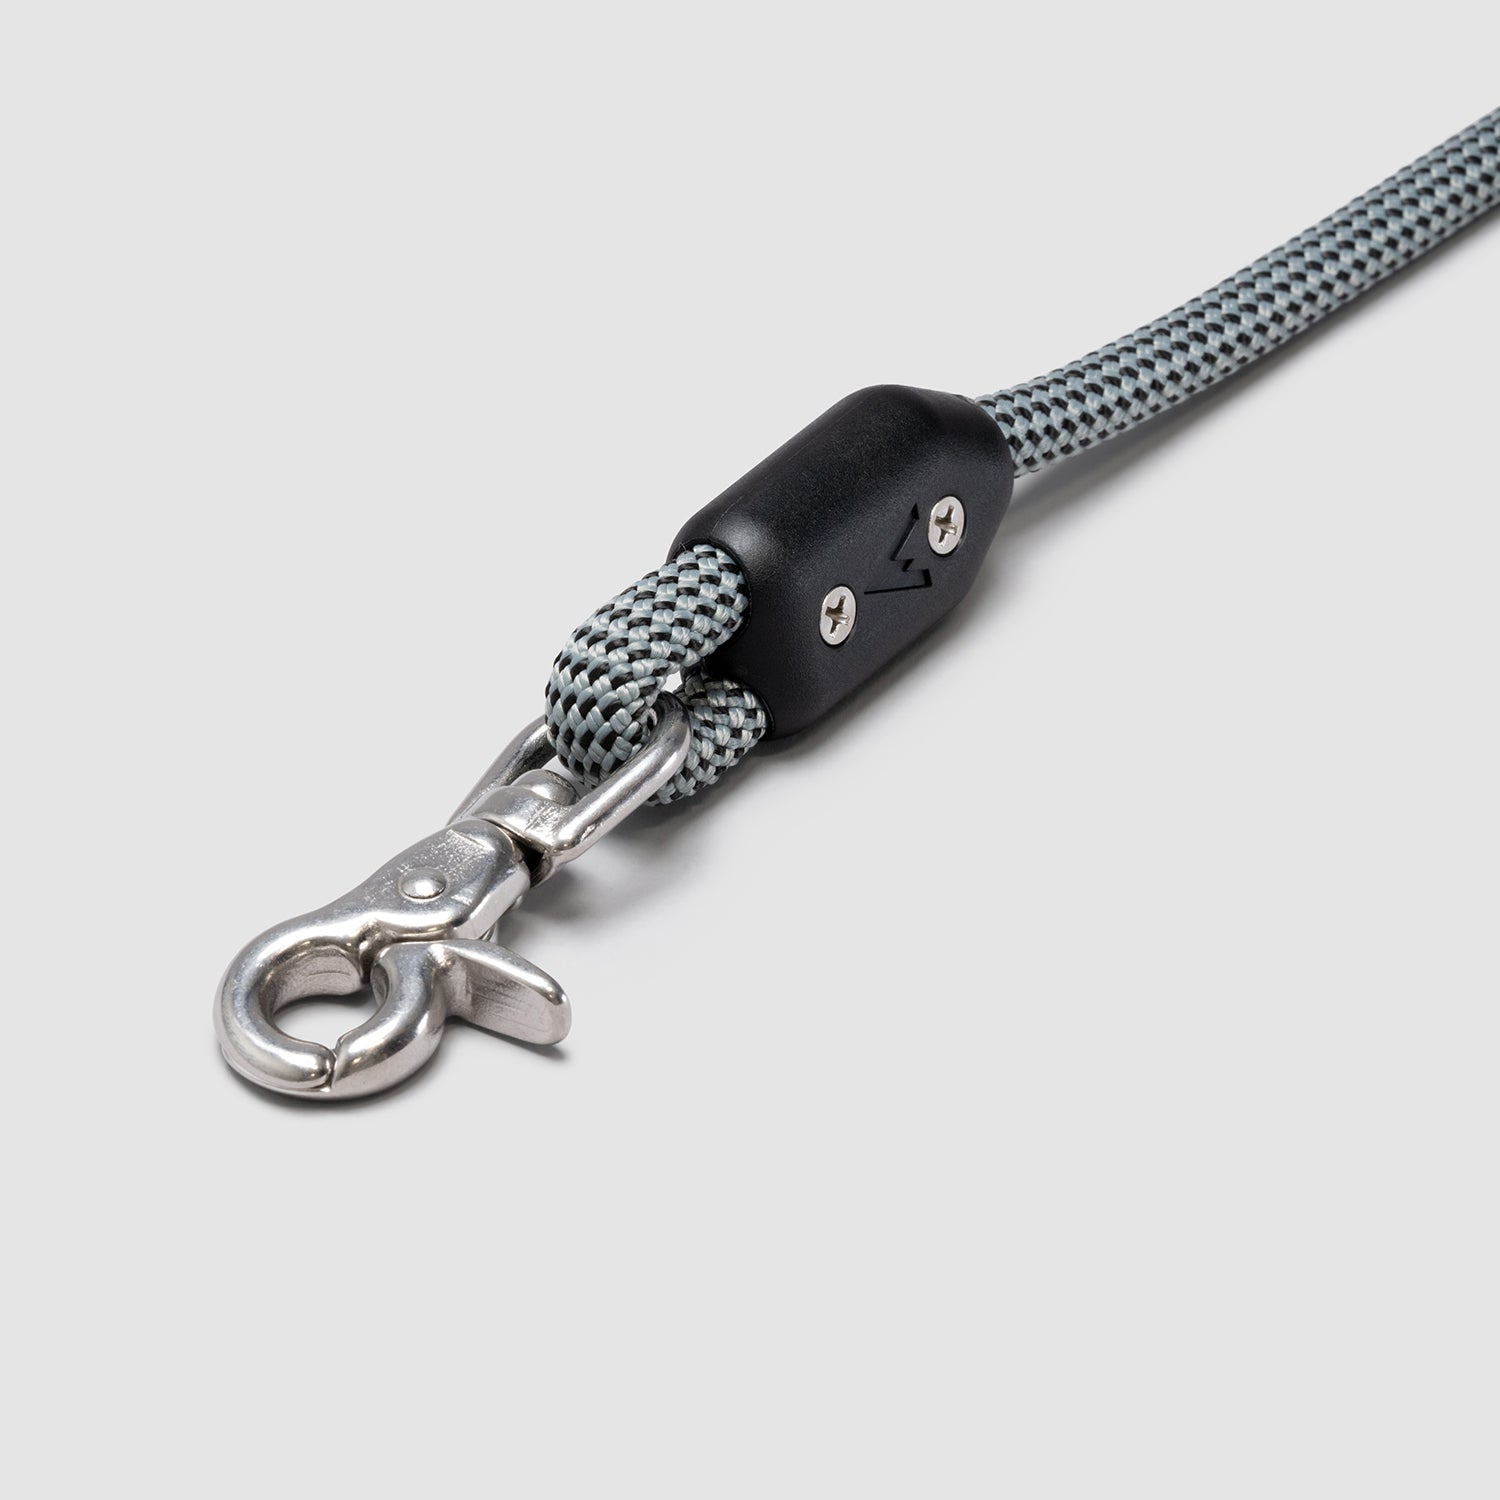 Lifetime Leash - Lifetime Warranty Climbing Rope Dog Leash Made in USA, Silver / 5 Feet / Traffic Handle